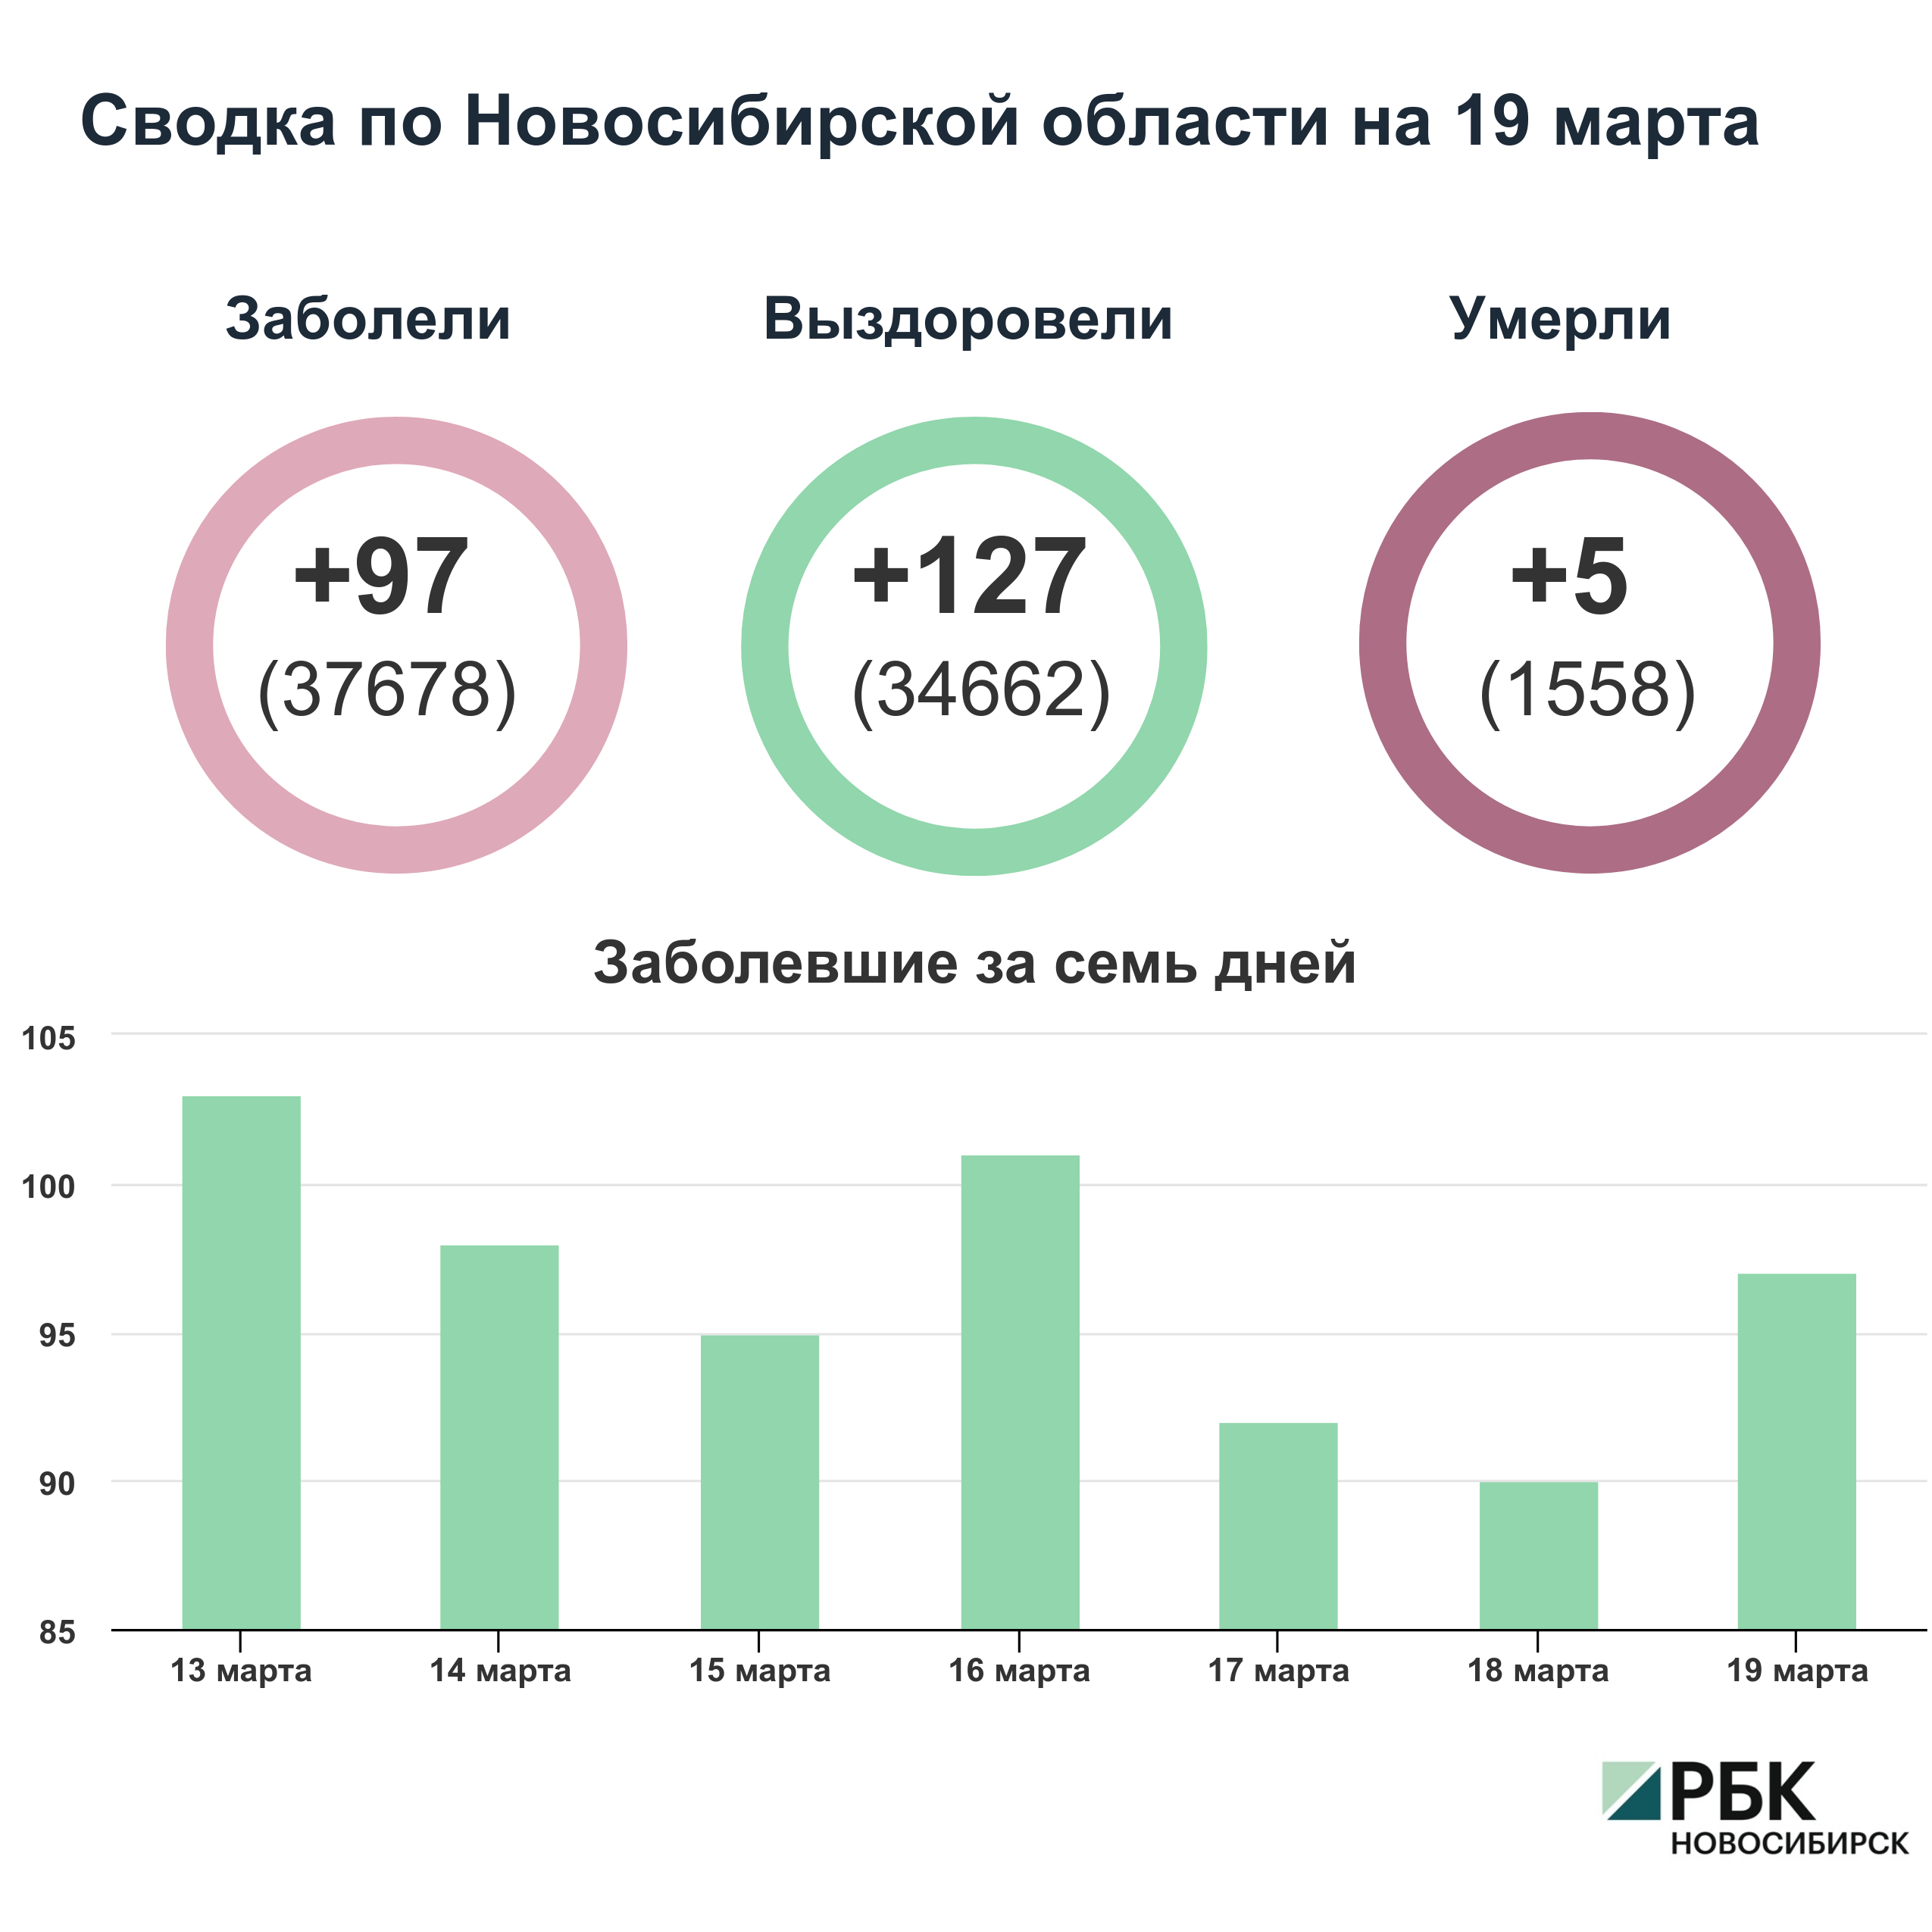 Коронавирус в Новосибирске: сводка на 19 марта